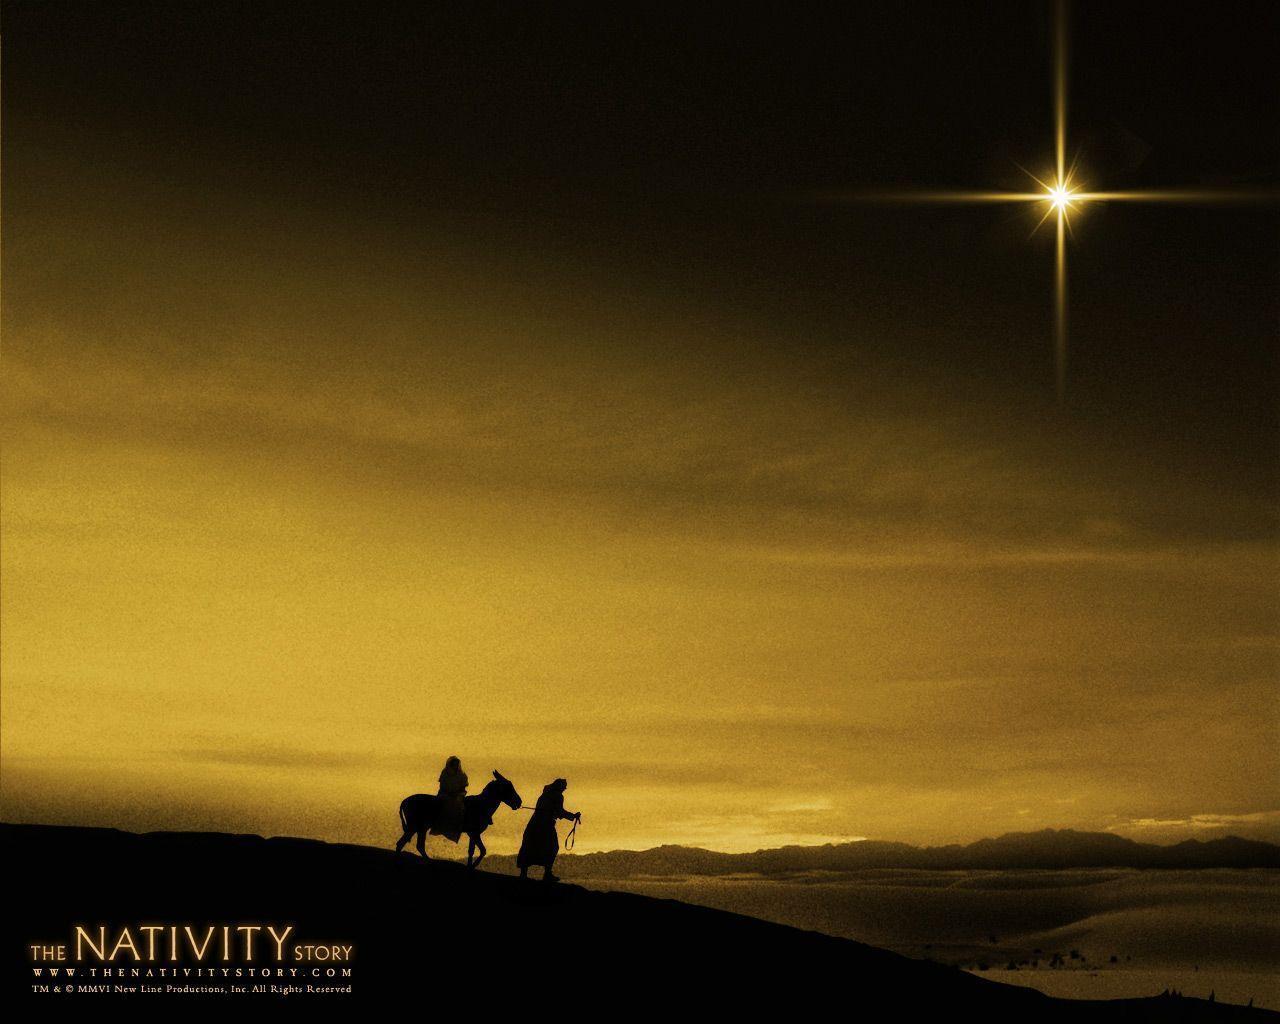 Religious Christmas Wallpaper